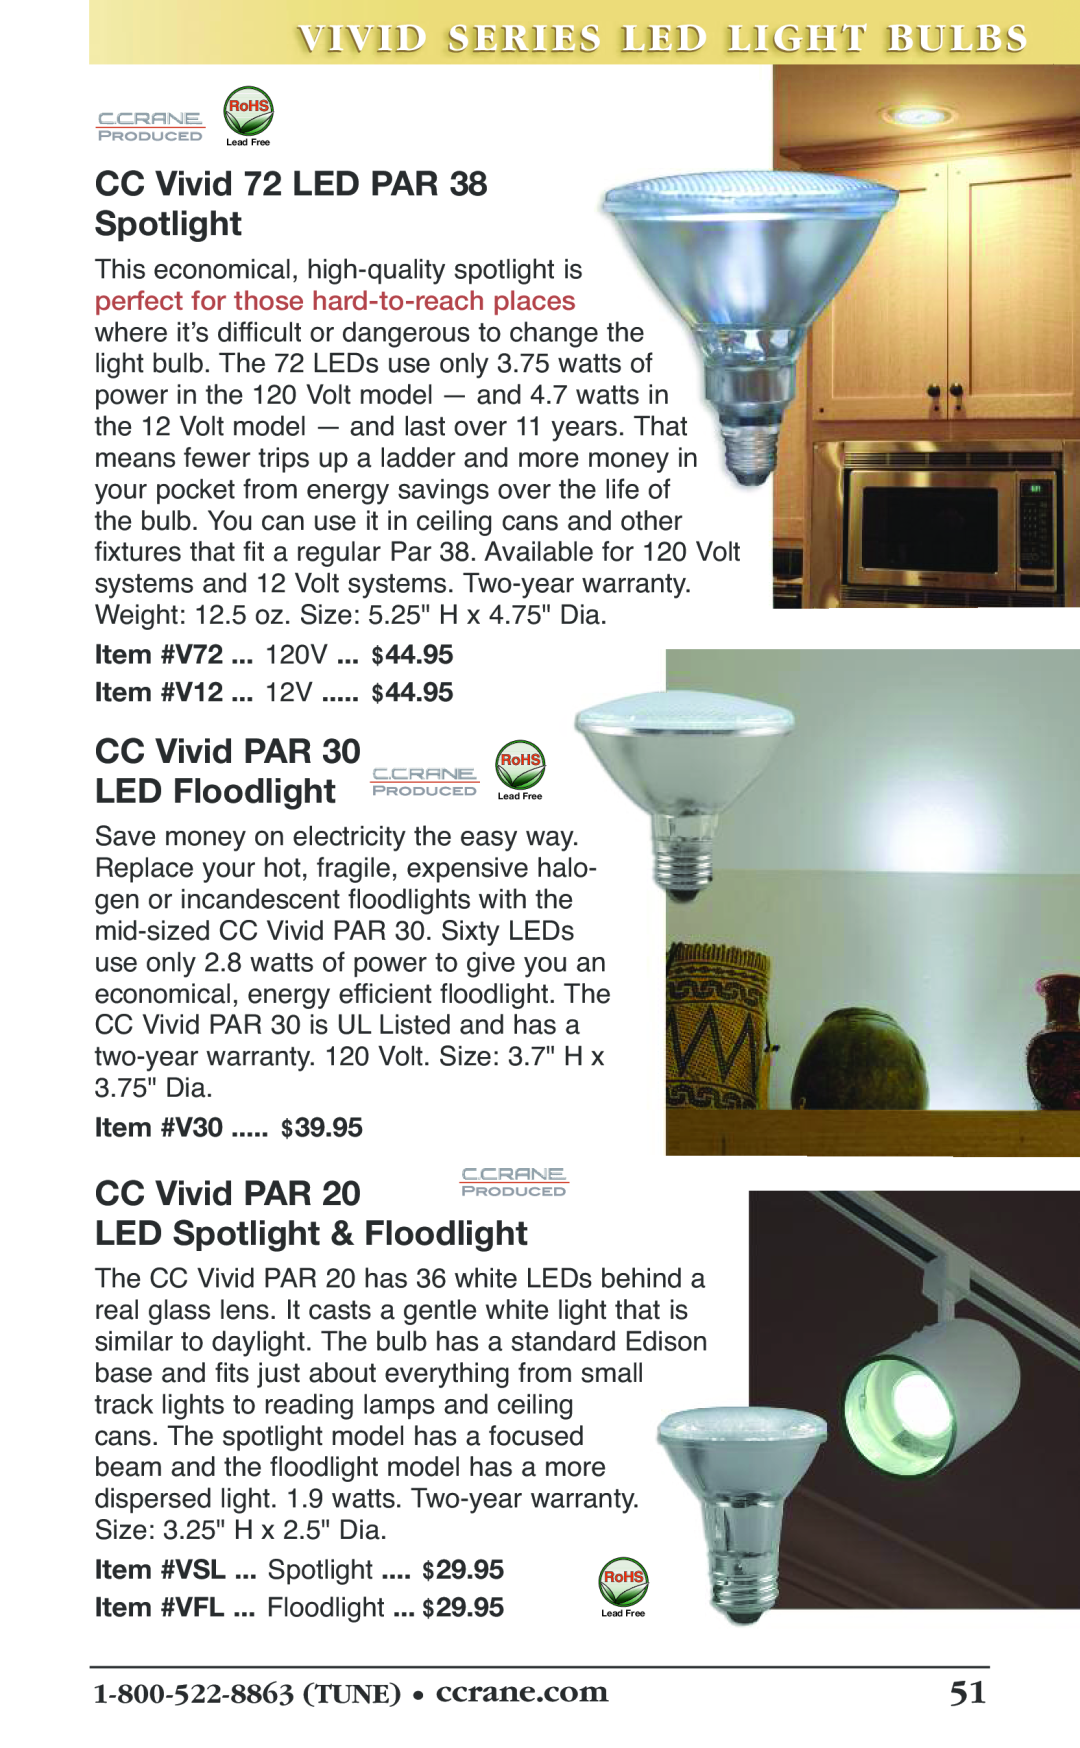 C. Crane 19f CC Vivid 72 LED PAR Spotlight, CC Vivid PAR, LED Floodlight Produced Lead Free, LED Spotlight & Floodlight 